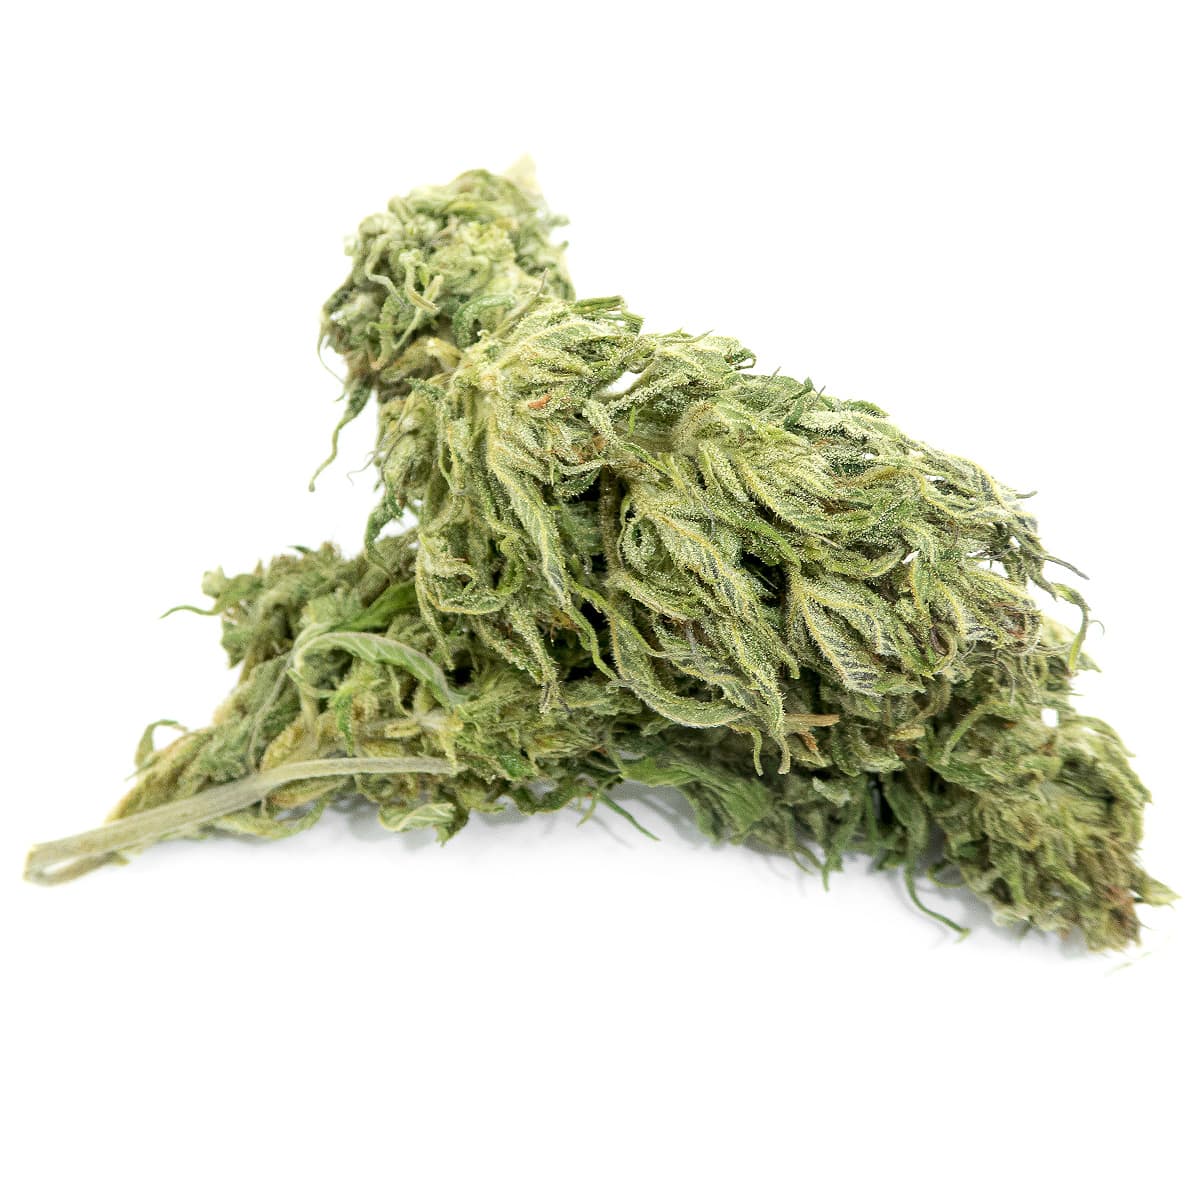 swiss-cbd-wholesale-legal-cannabis-light-indoor-premium-weed-europe-delivery-felina-big.jpg